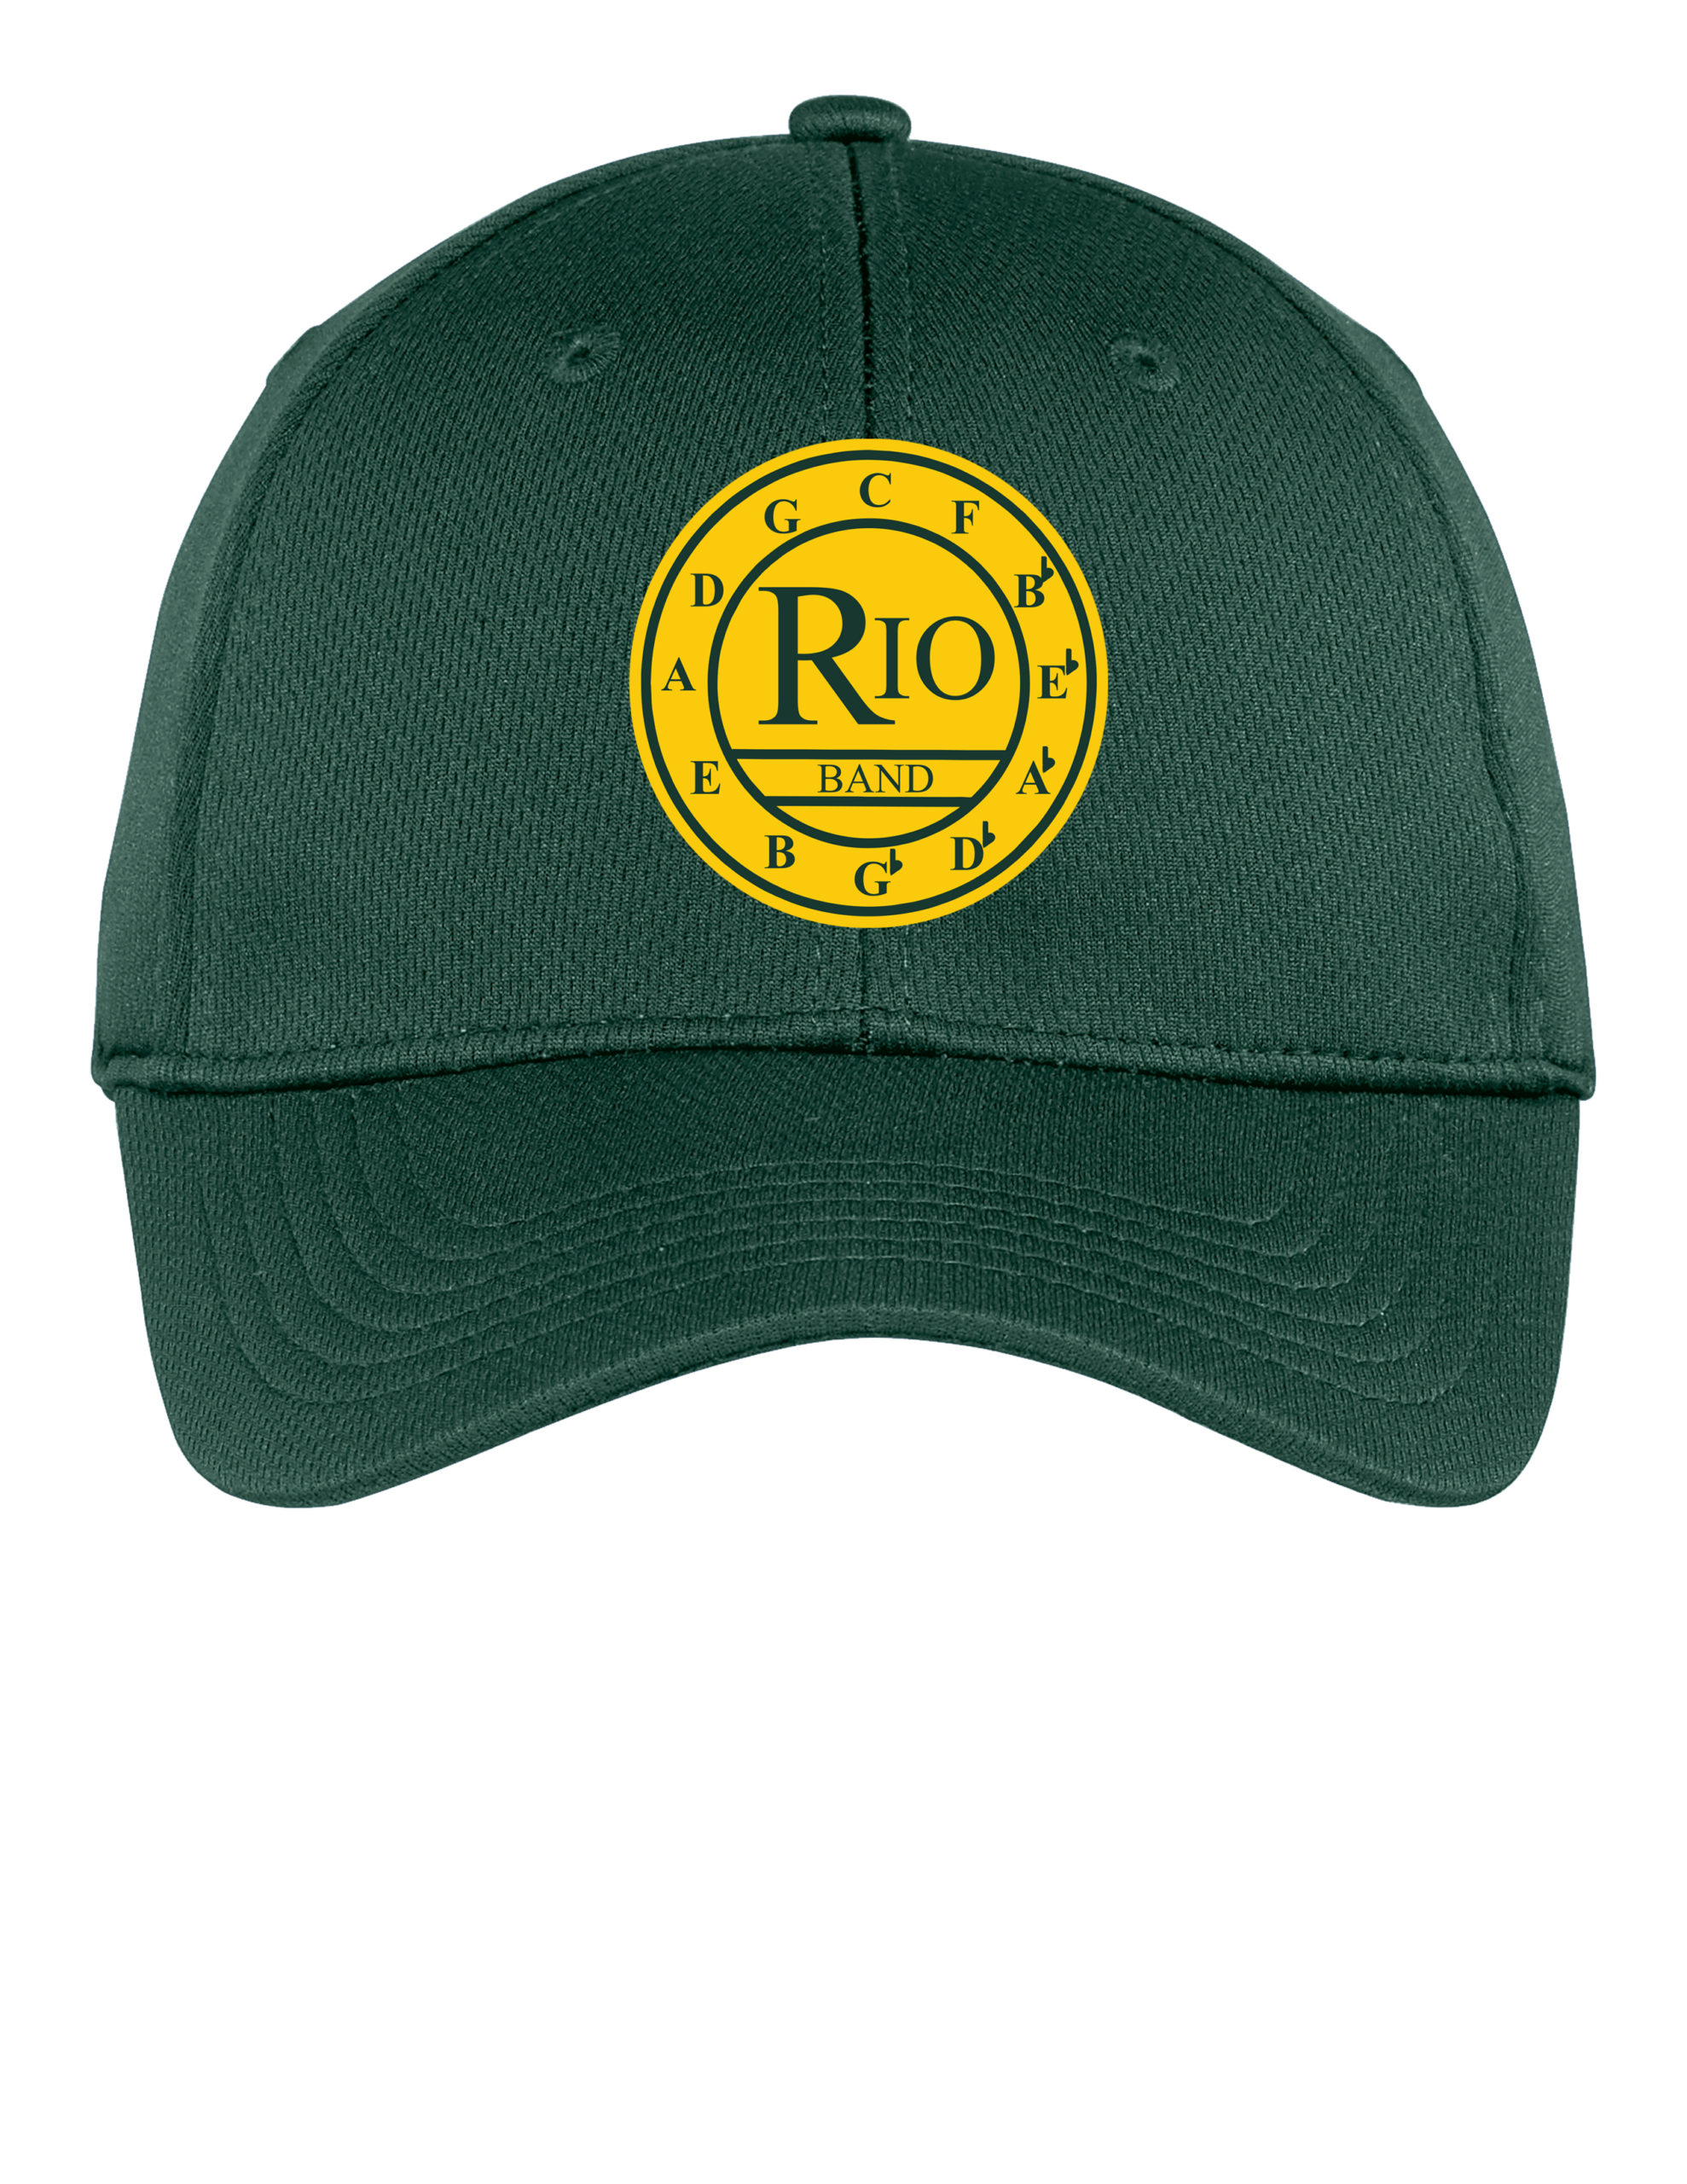 https://rioband.net/wp-content/uploads/2020/10/RAHS-Band_Green-Hat_Front-scaled.jpg